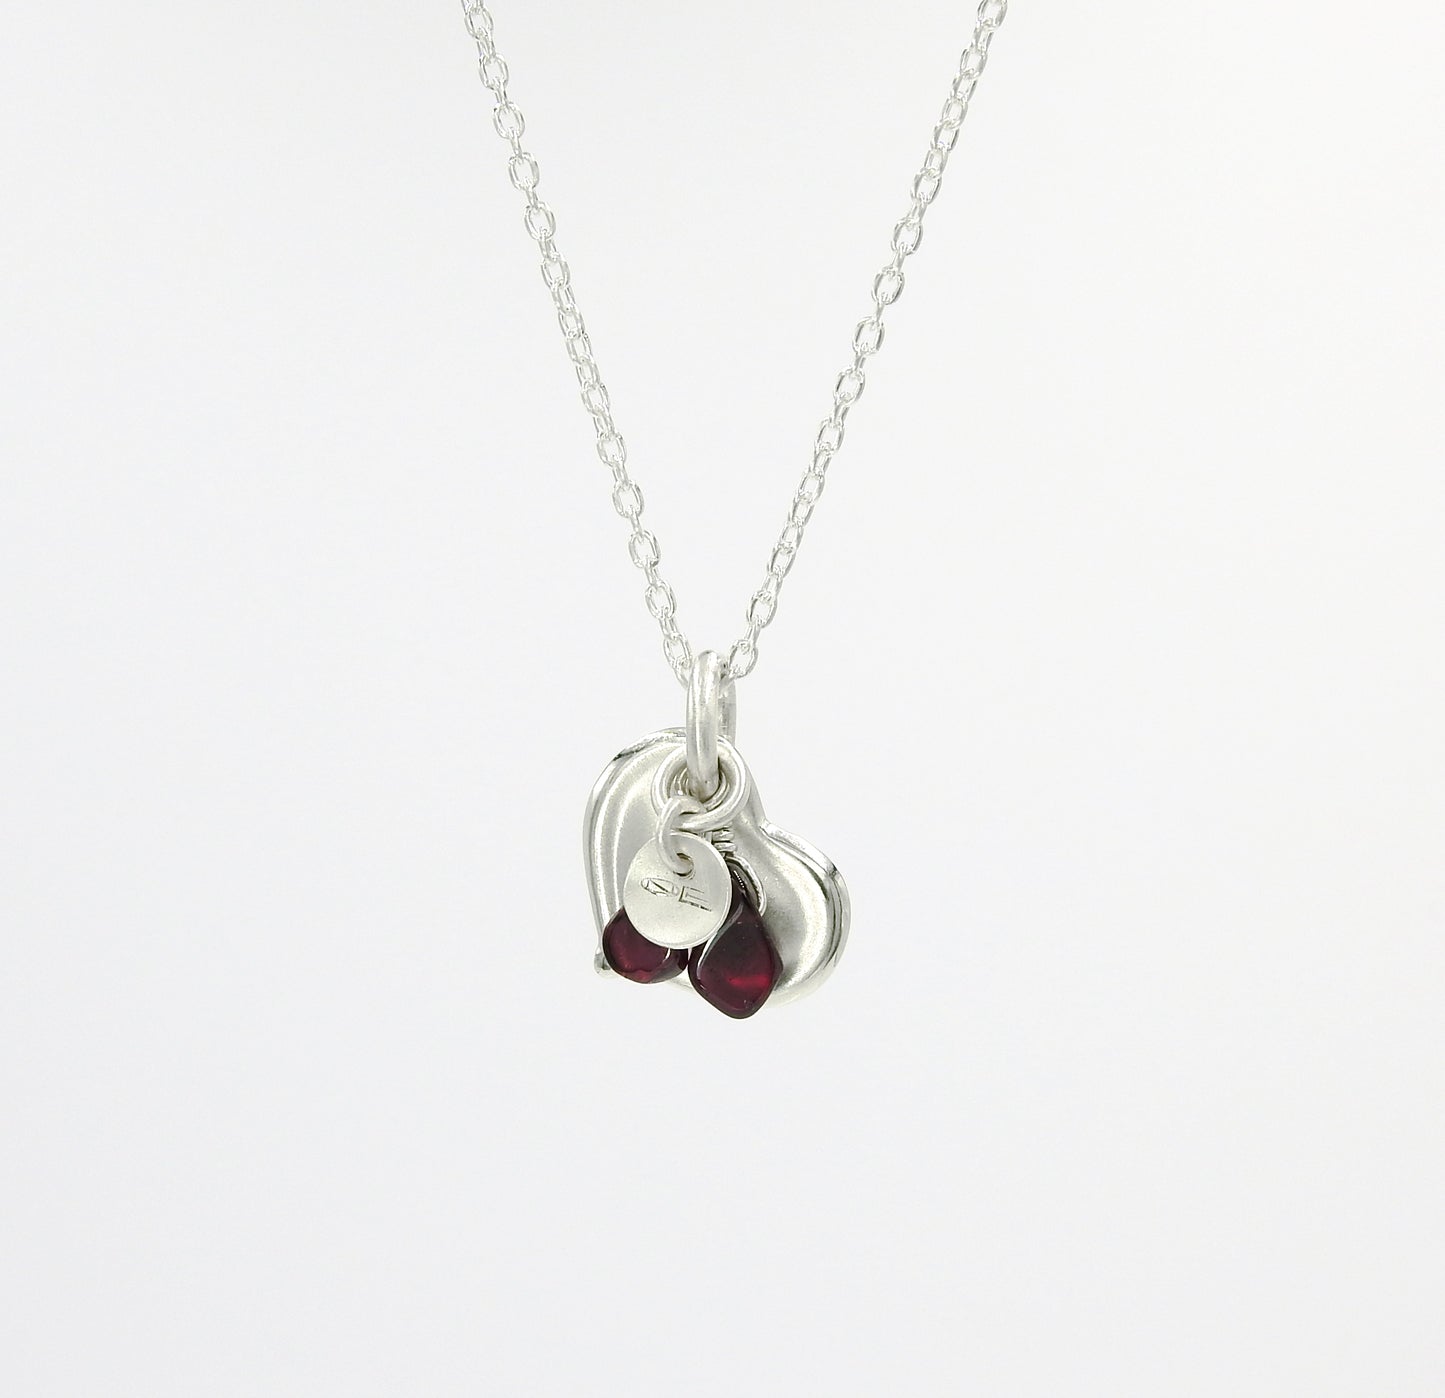 Heart necklace by ZEALmetal, Nicole Horlor, in Kingston, ON Canada